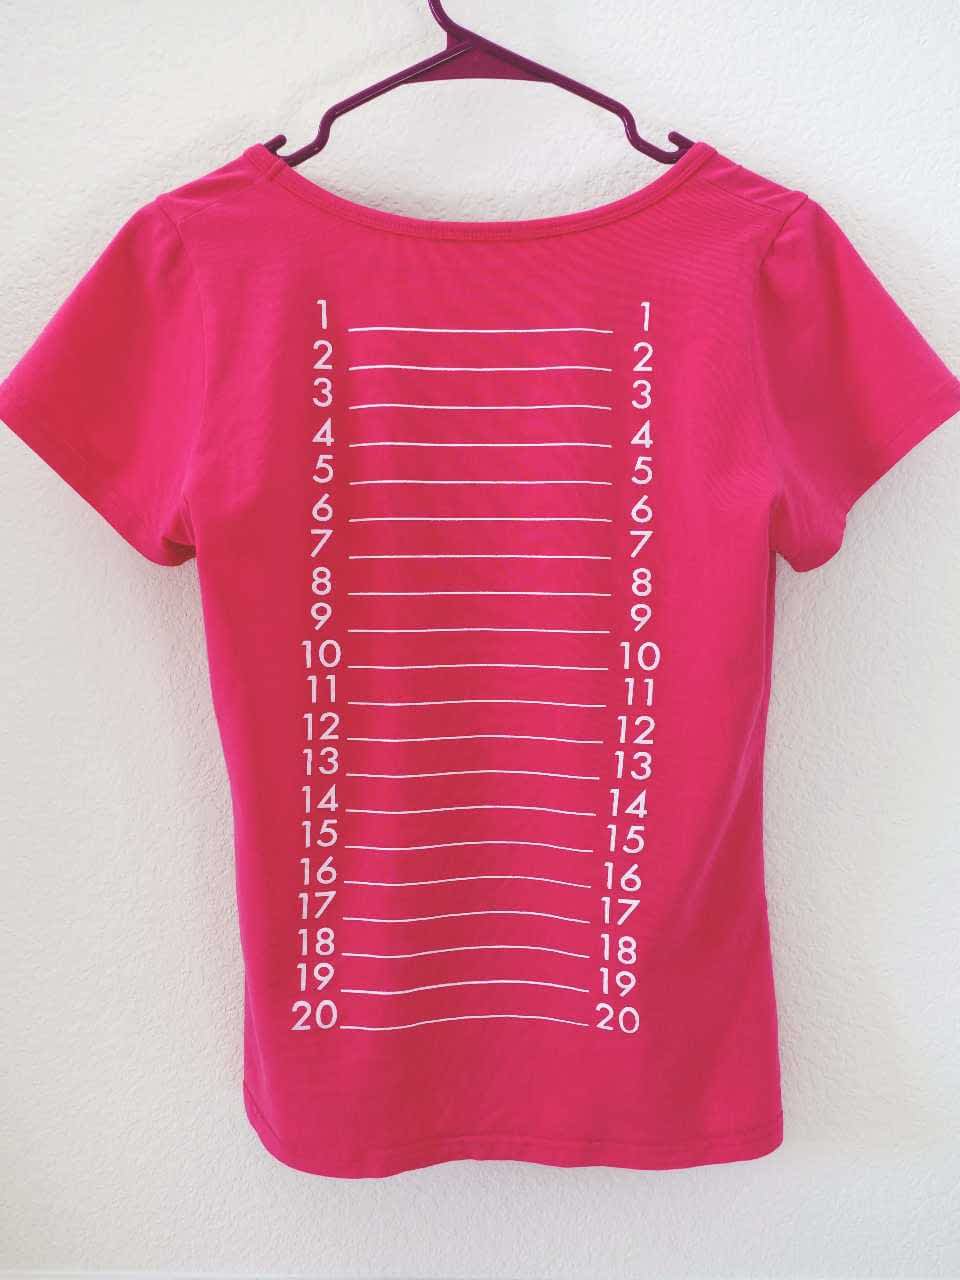 hairfinity measurement shirt